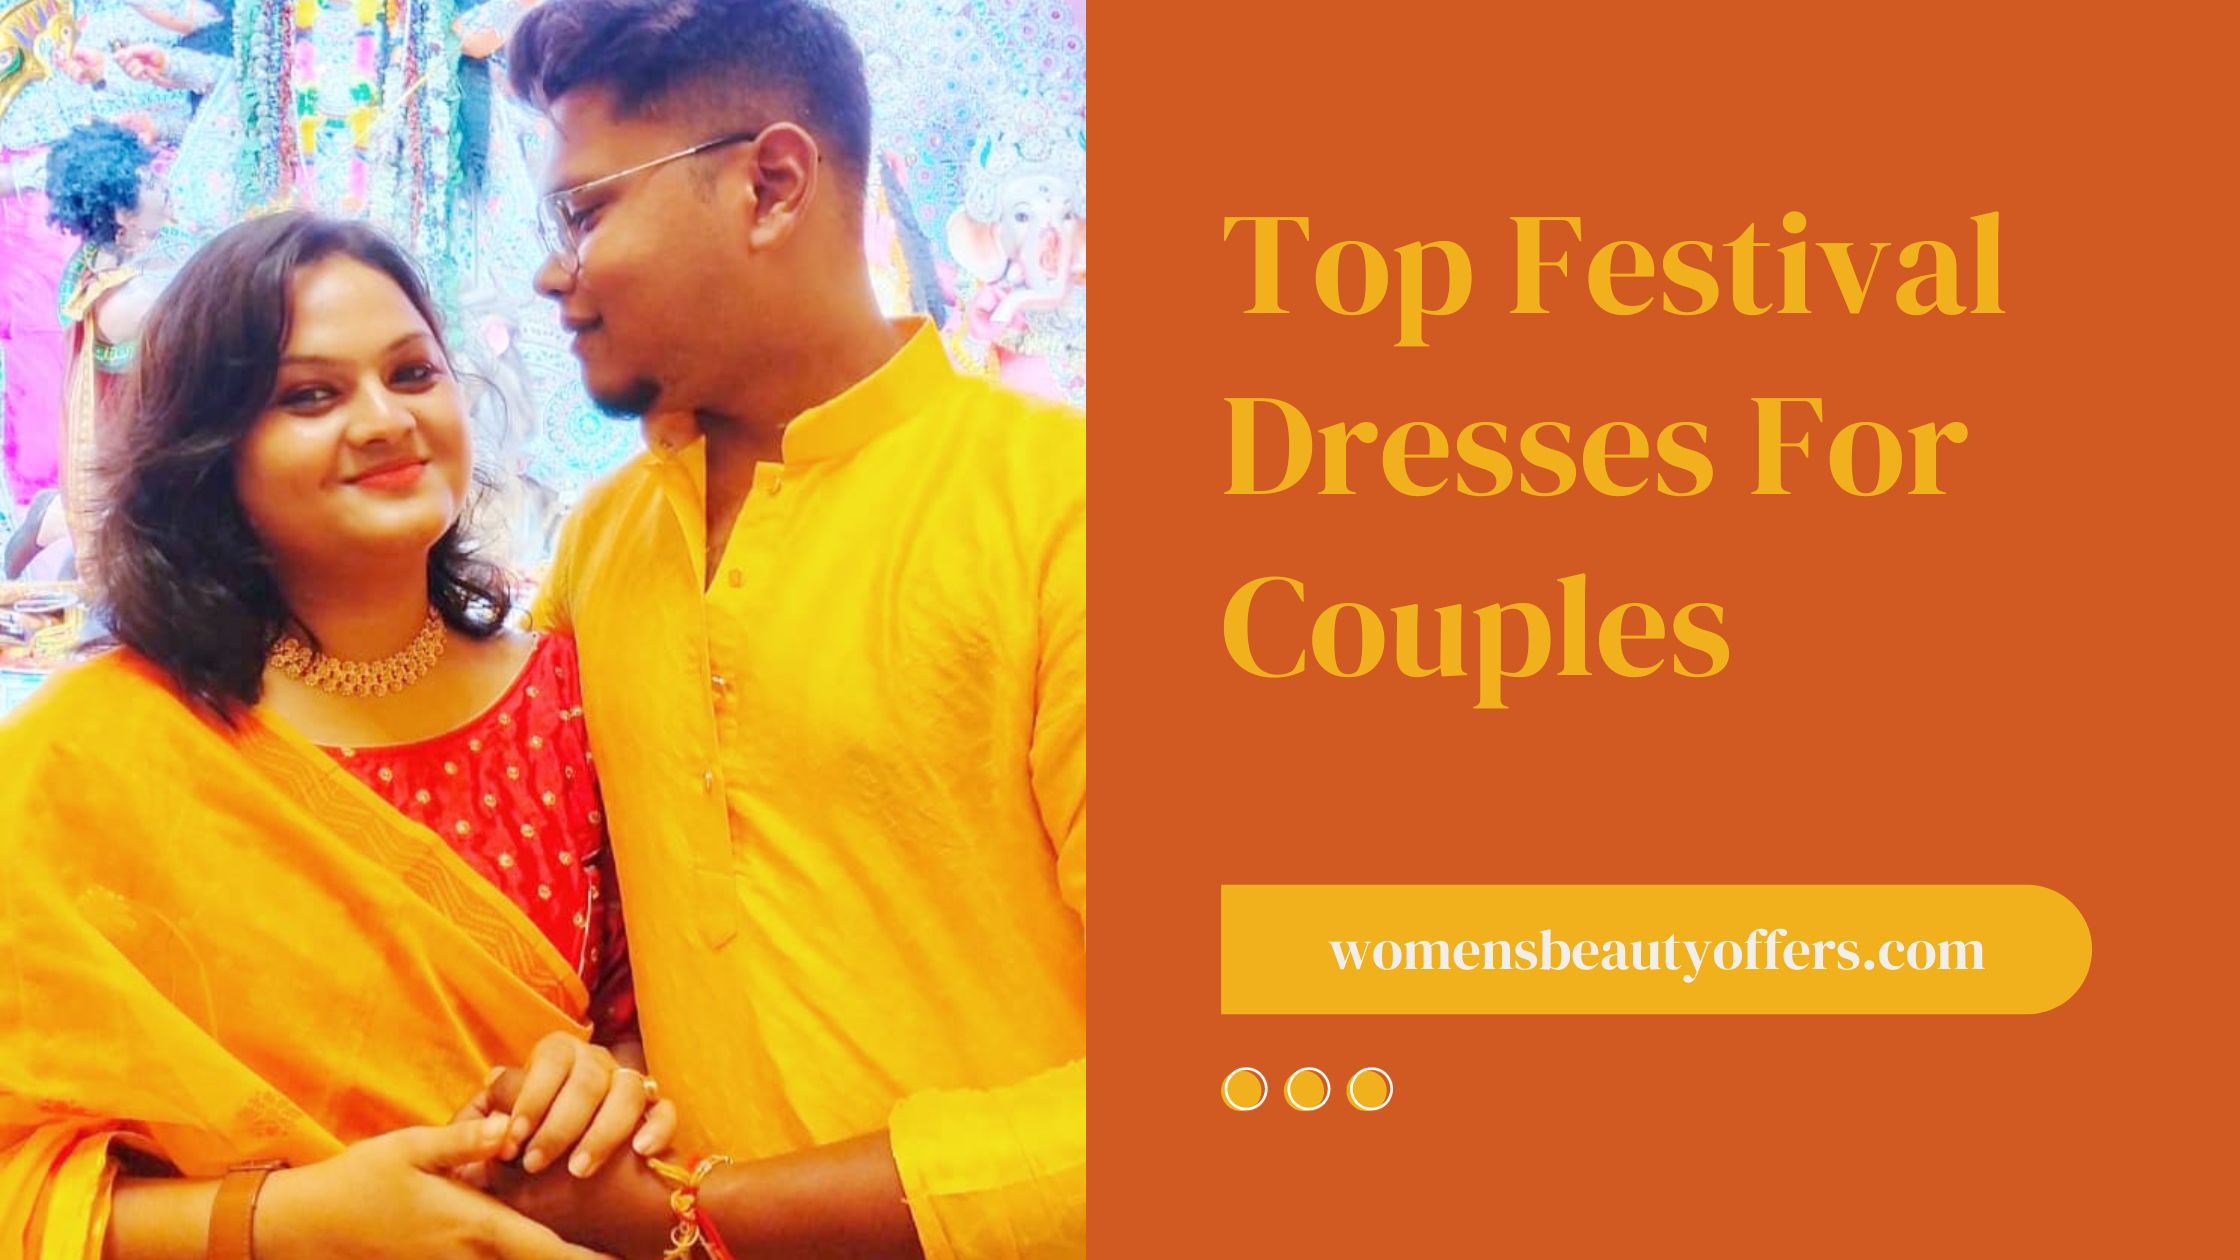 Top Festival Dresses For Couples - Couple Dress For Diwali